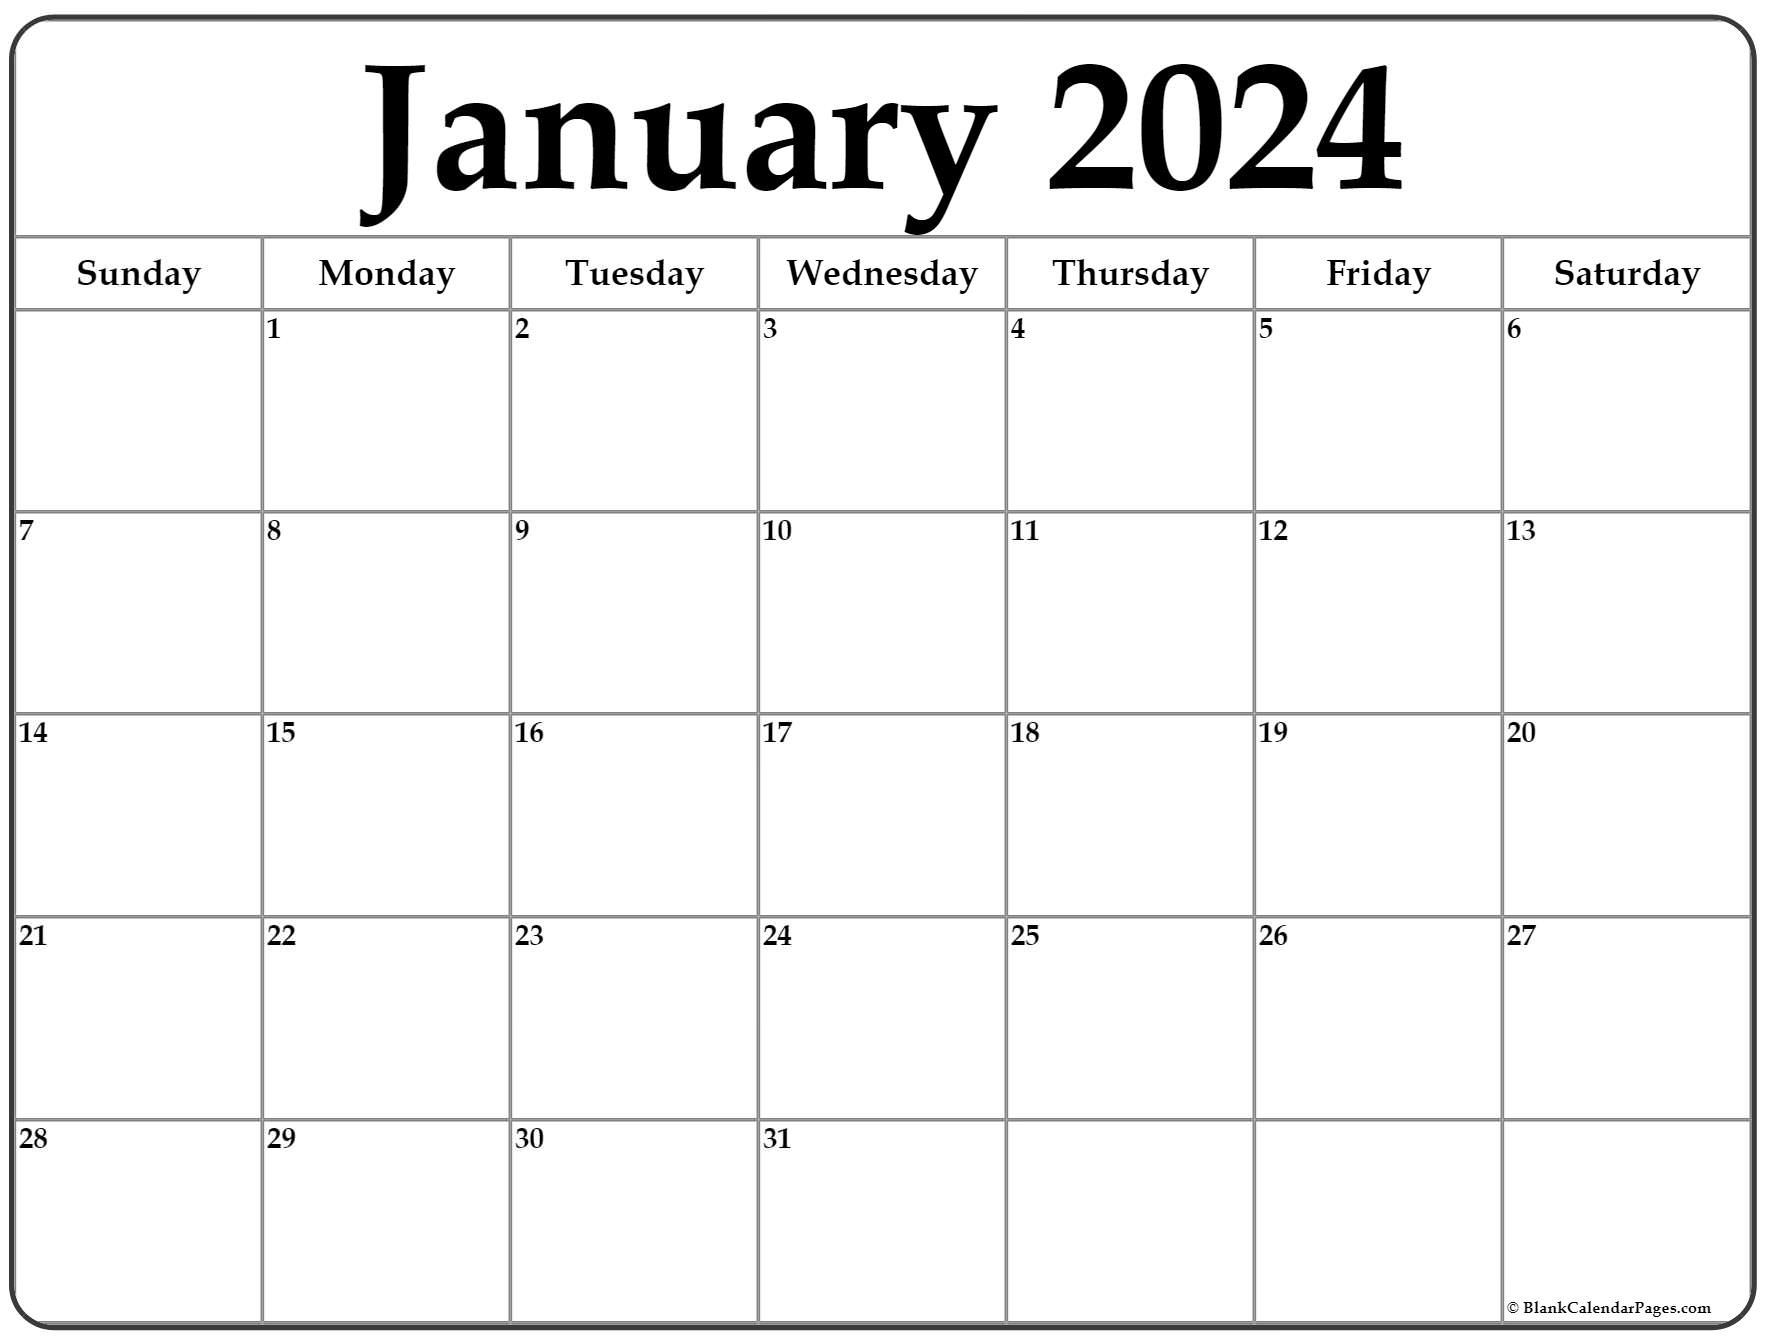 January 2024 Calendar | Free Printable Calendar | Printable Calendar 2024 Monthly Free